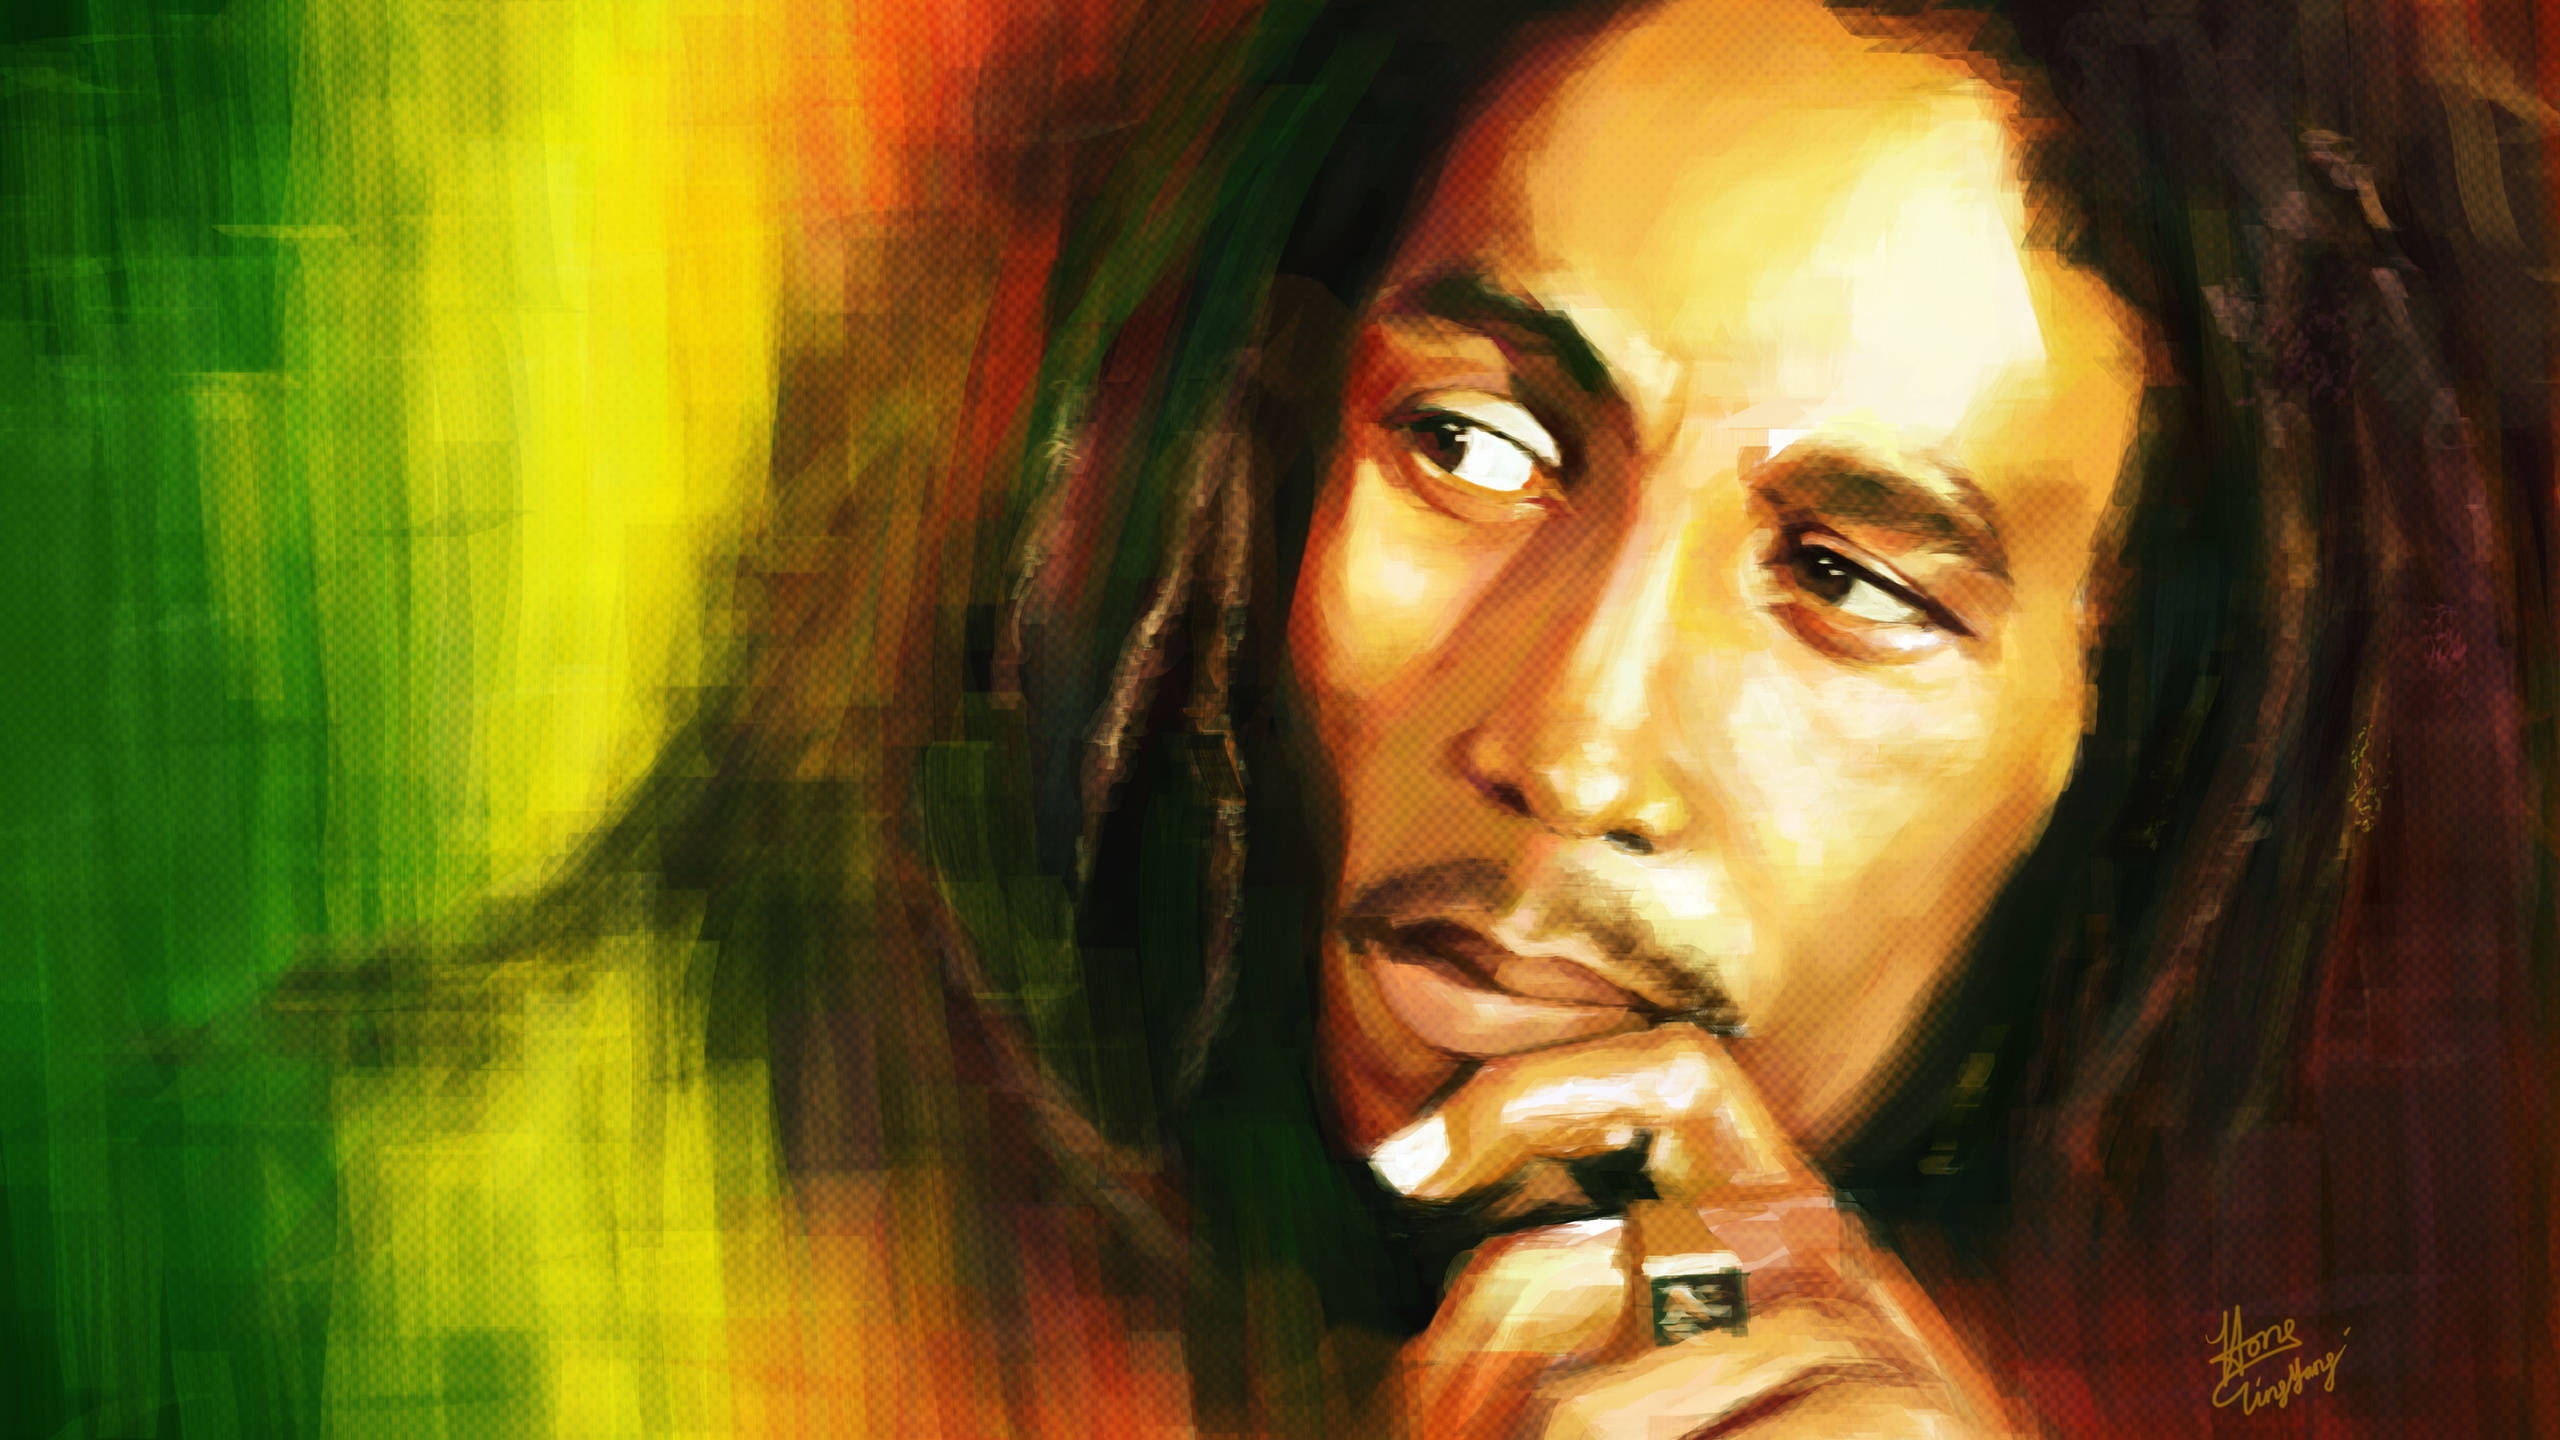 Bob Marley Artwork for 2560x1440 HDTV resolution